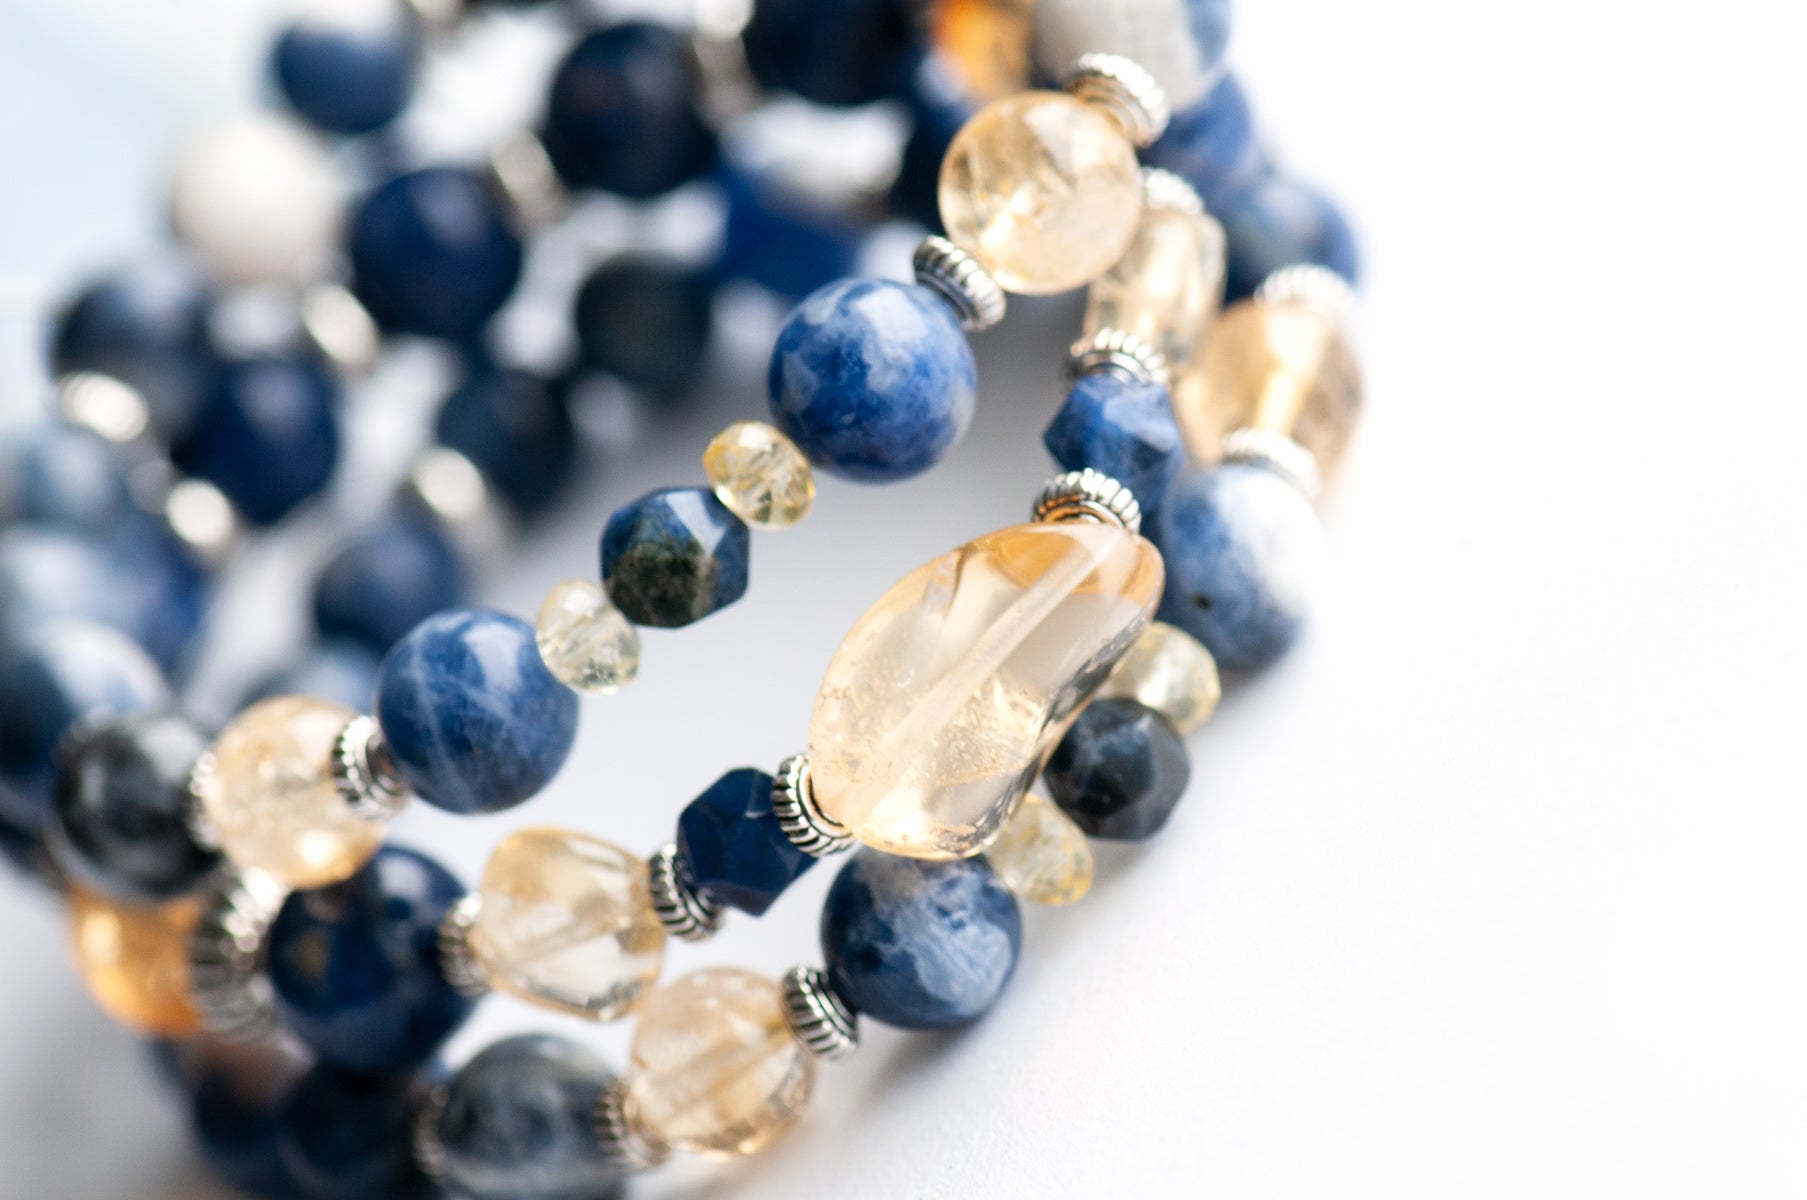 Radiant Lynx bracelet set in sodalite and citrine gemstones